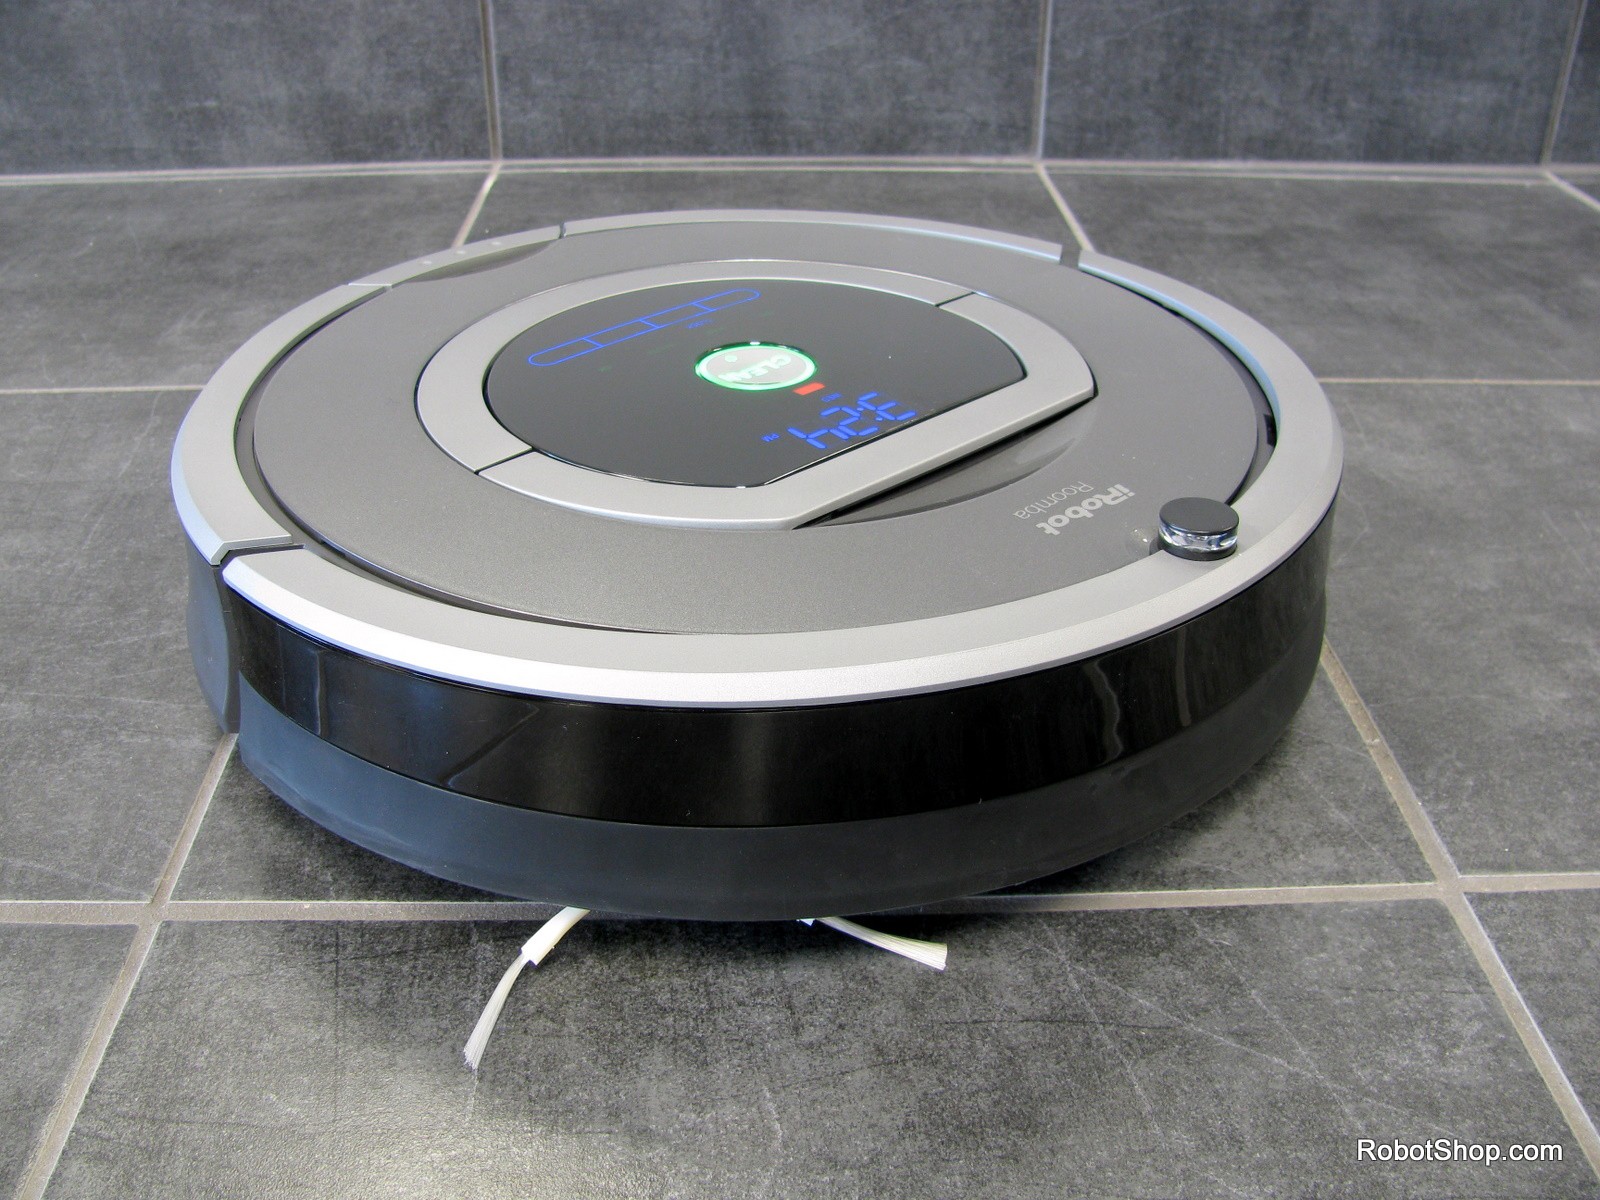 iRobot Roomba 780 Review